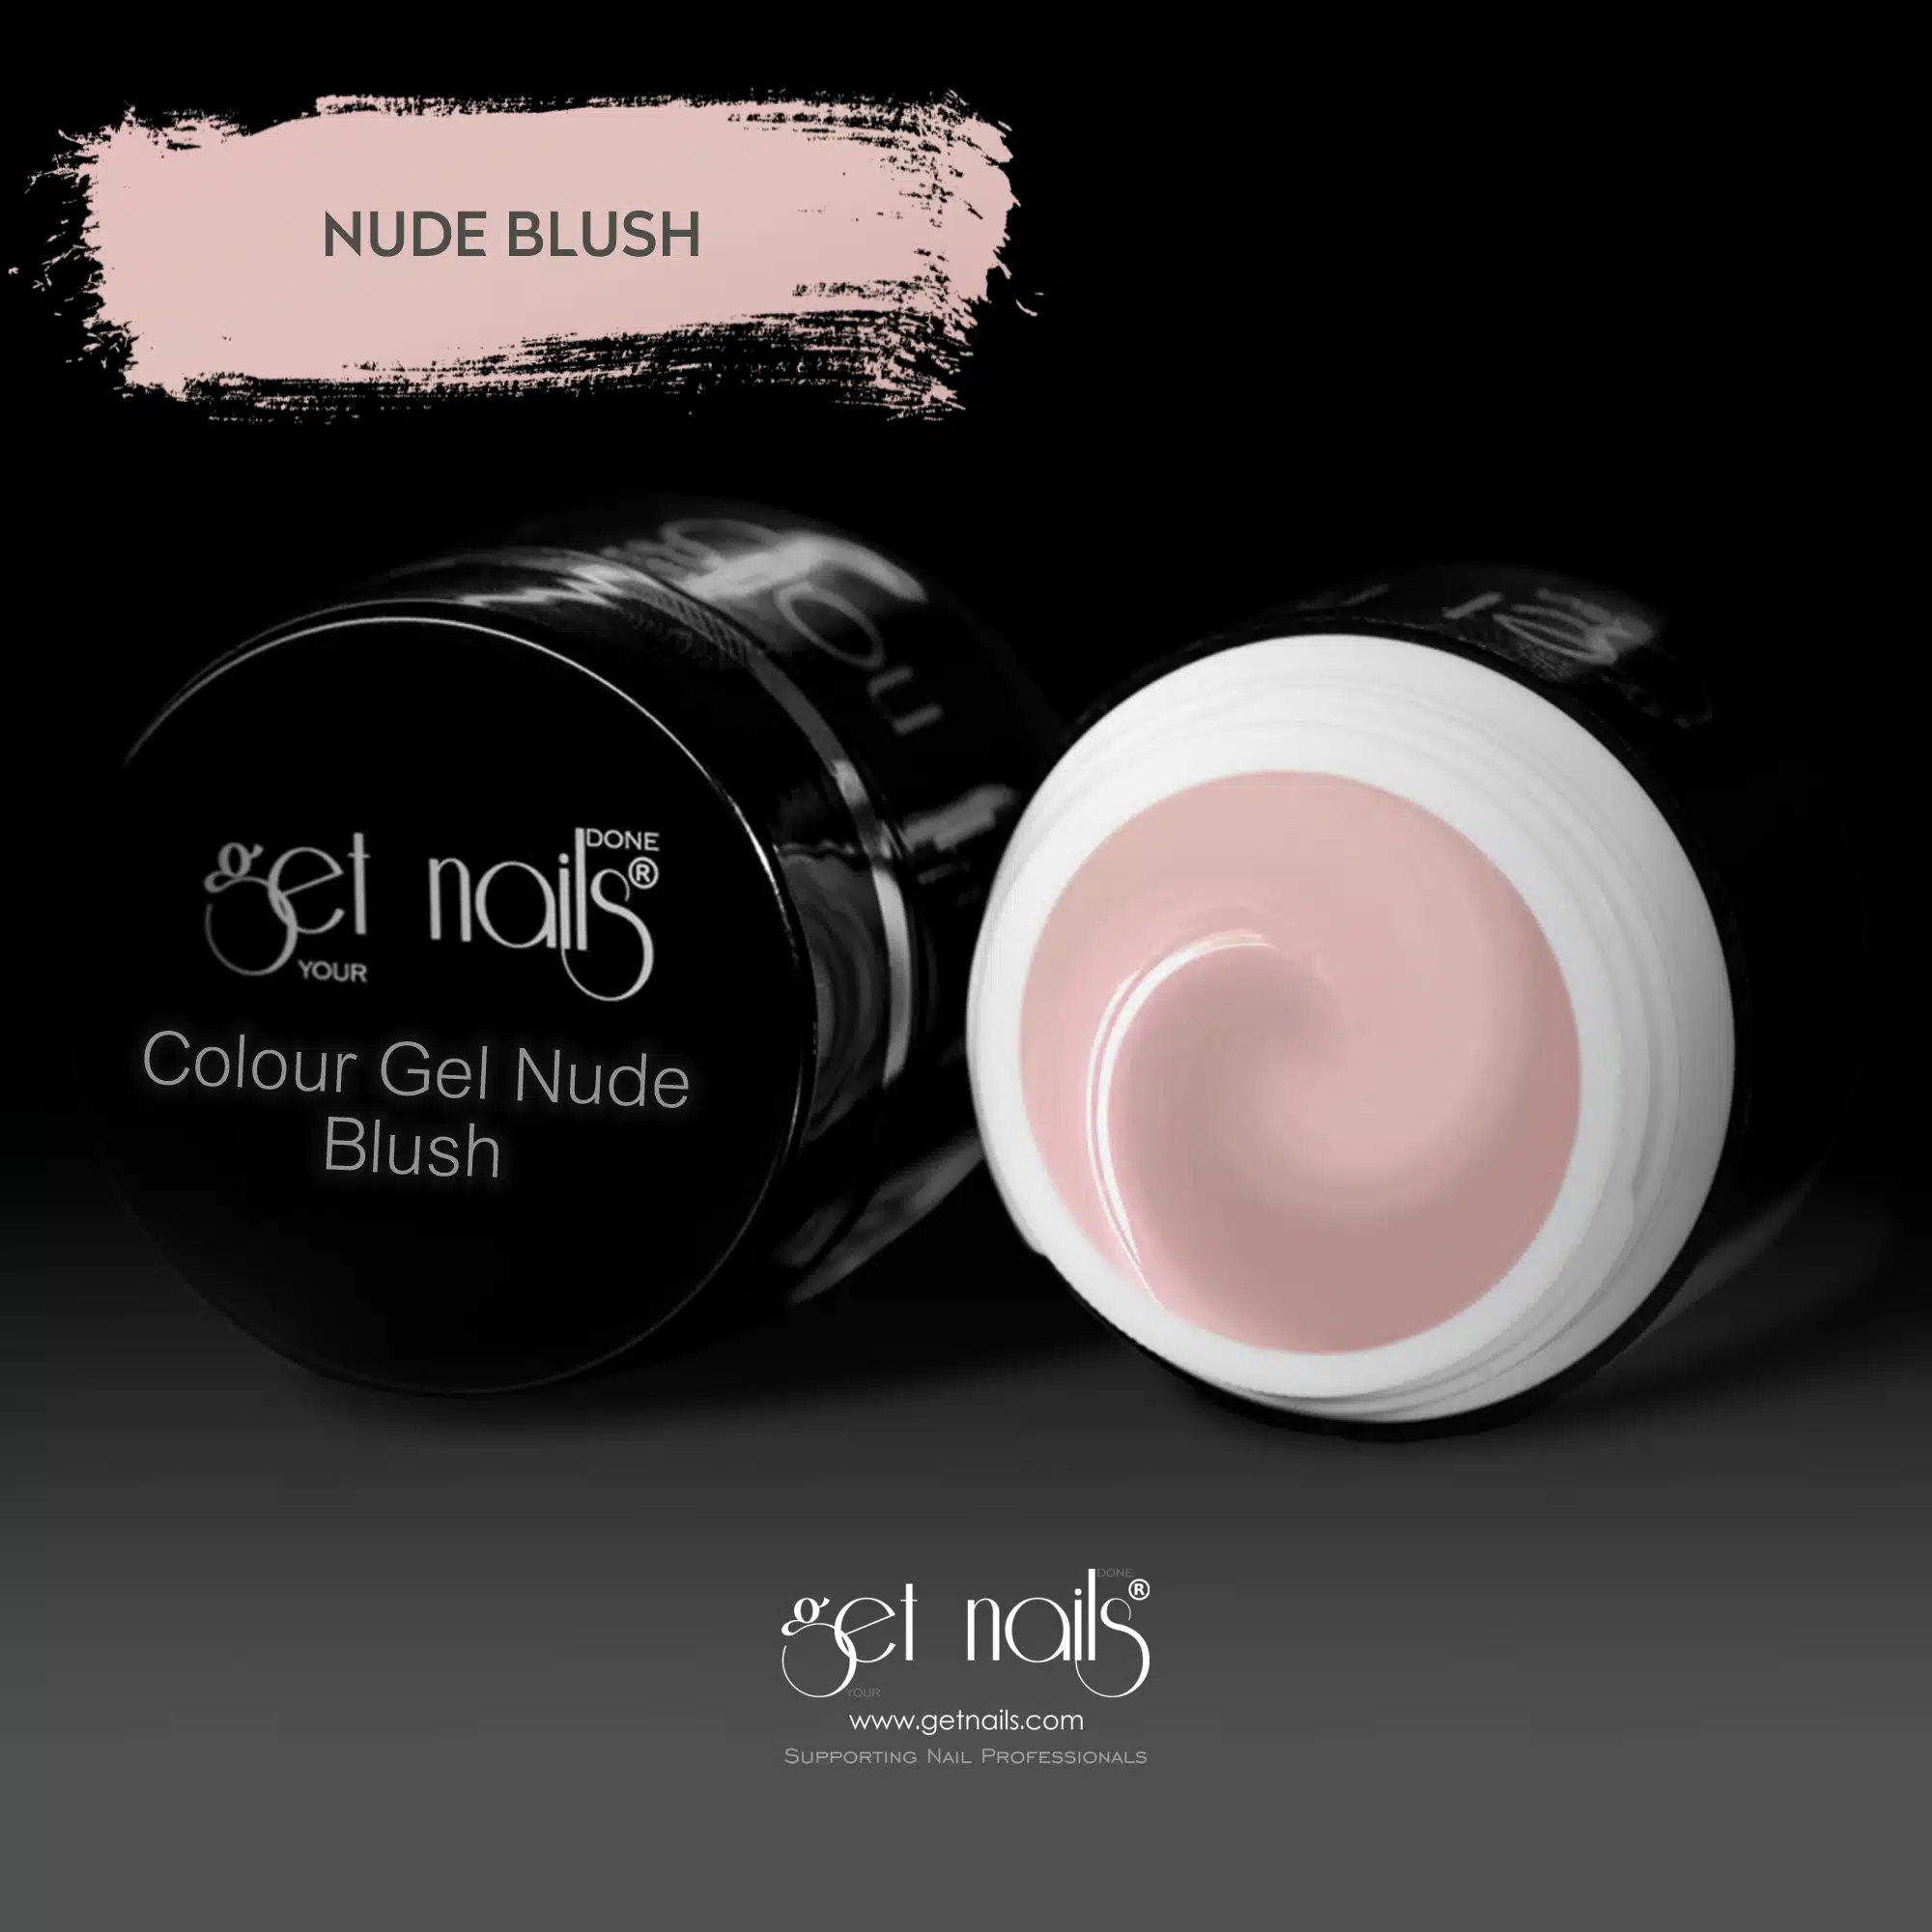 Get Nails Austria - Colour Gel Nude Blush 5g